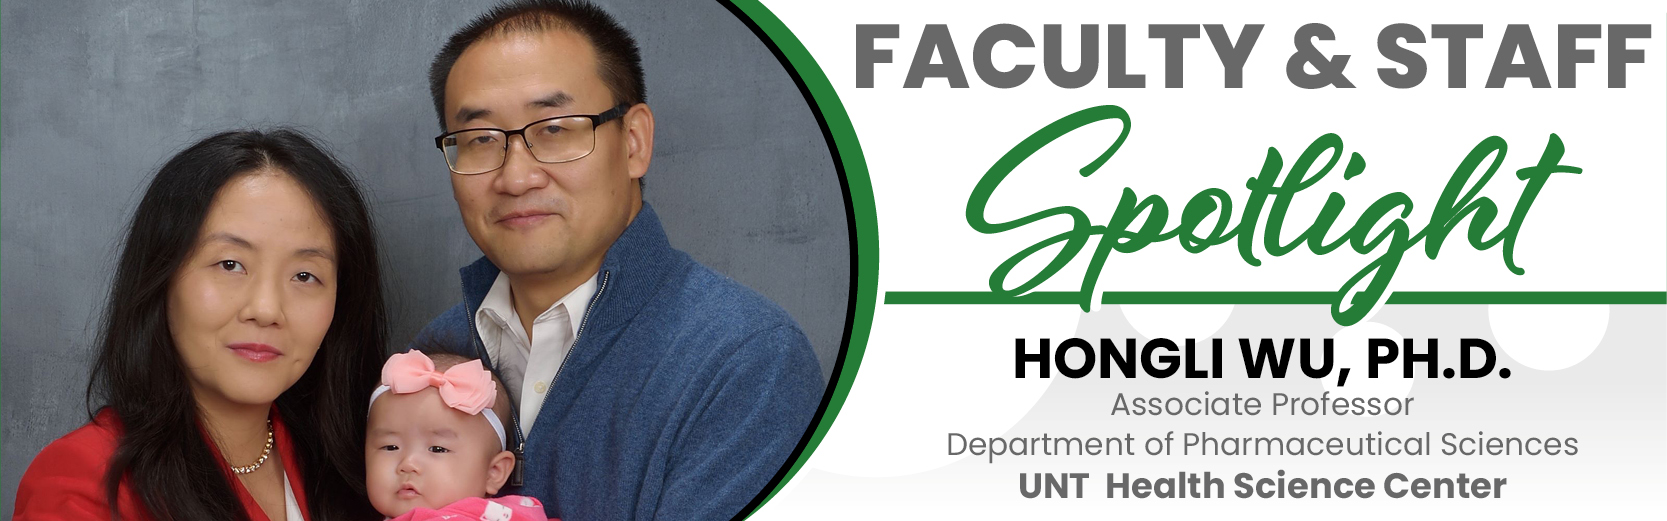 Faculty & Staff Spotlight: Hongli Wu, Ph.D., UNT Health Science ...